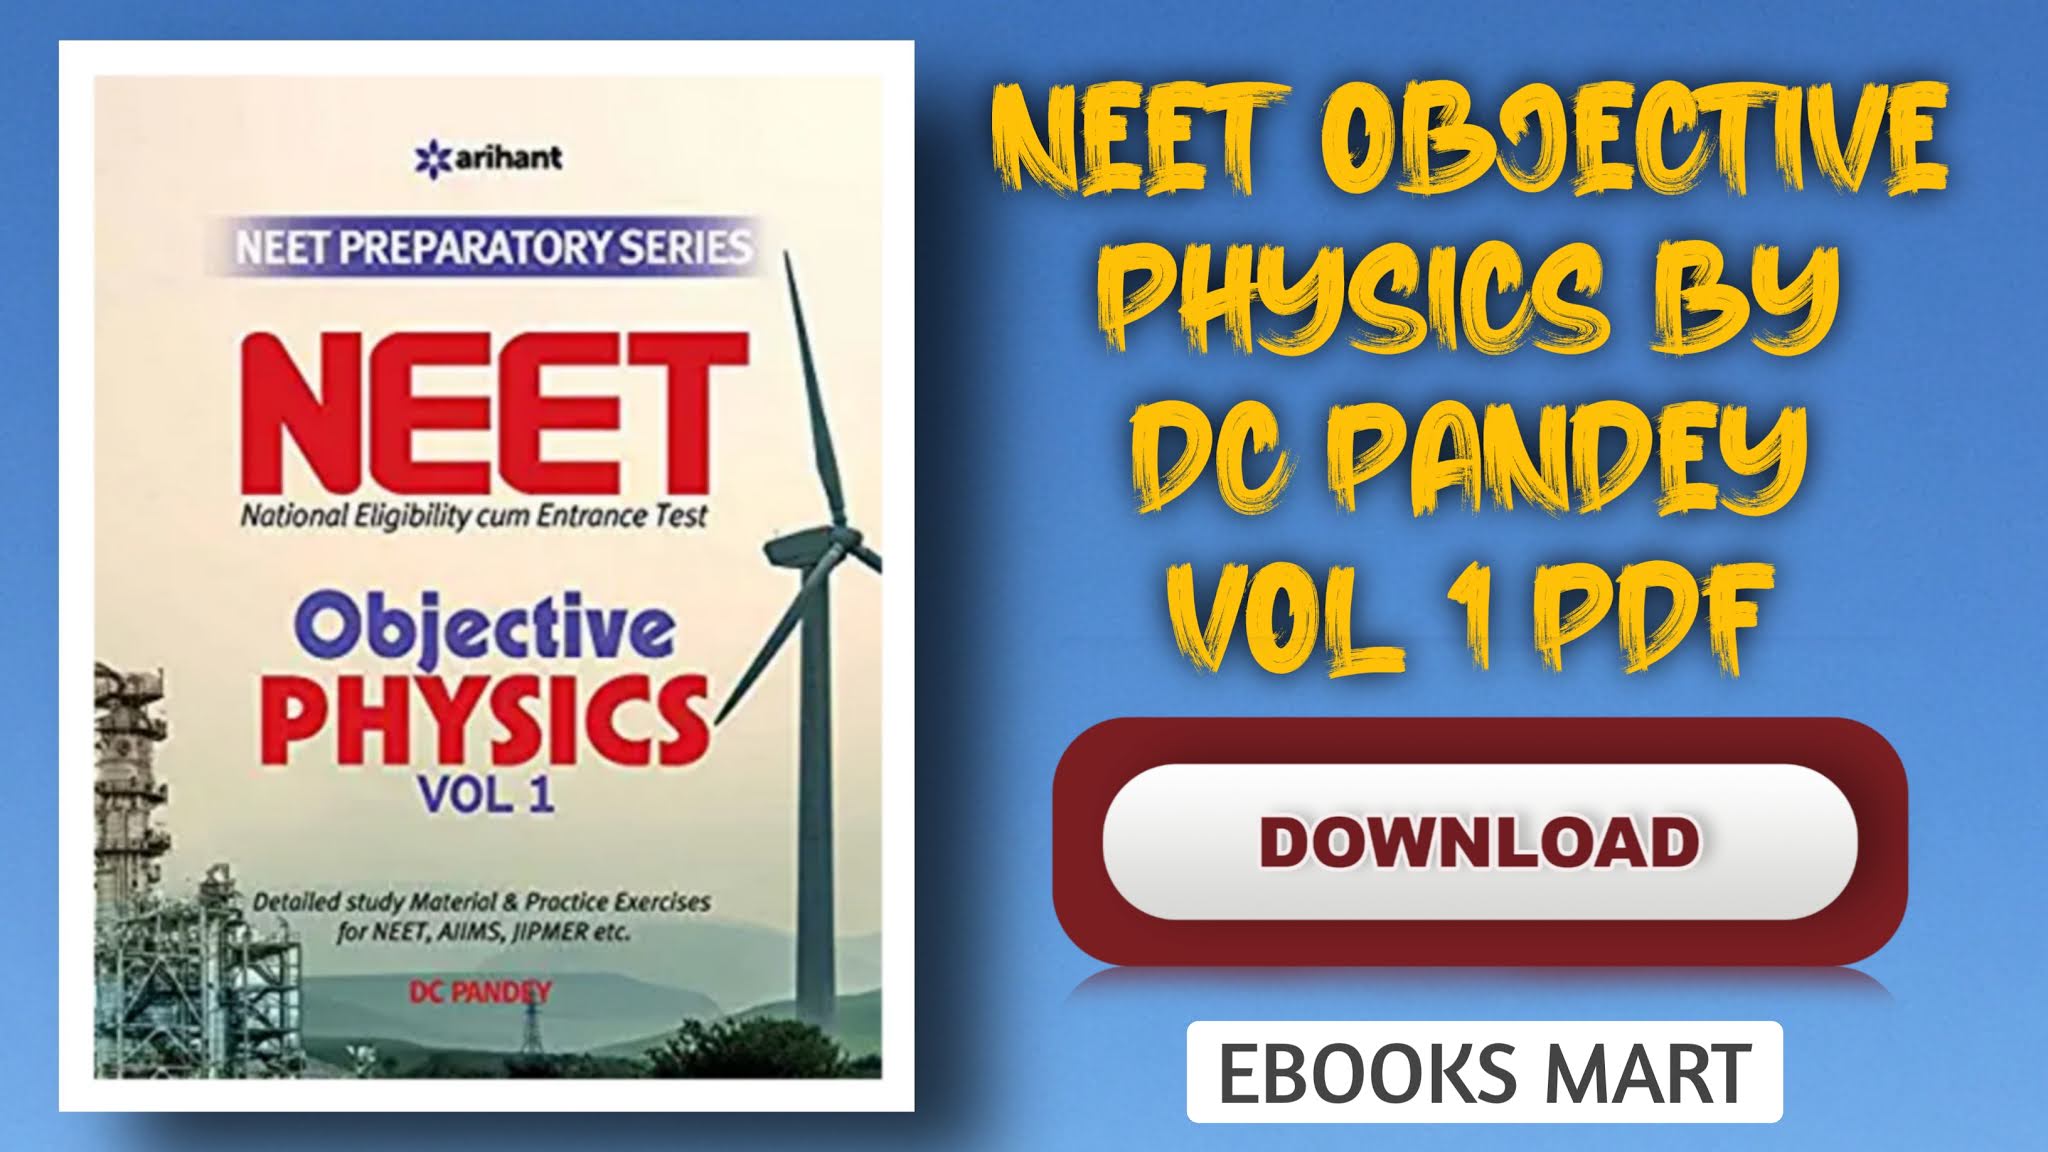 truemans objective physics pdf book